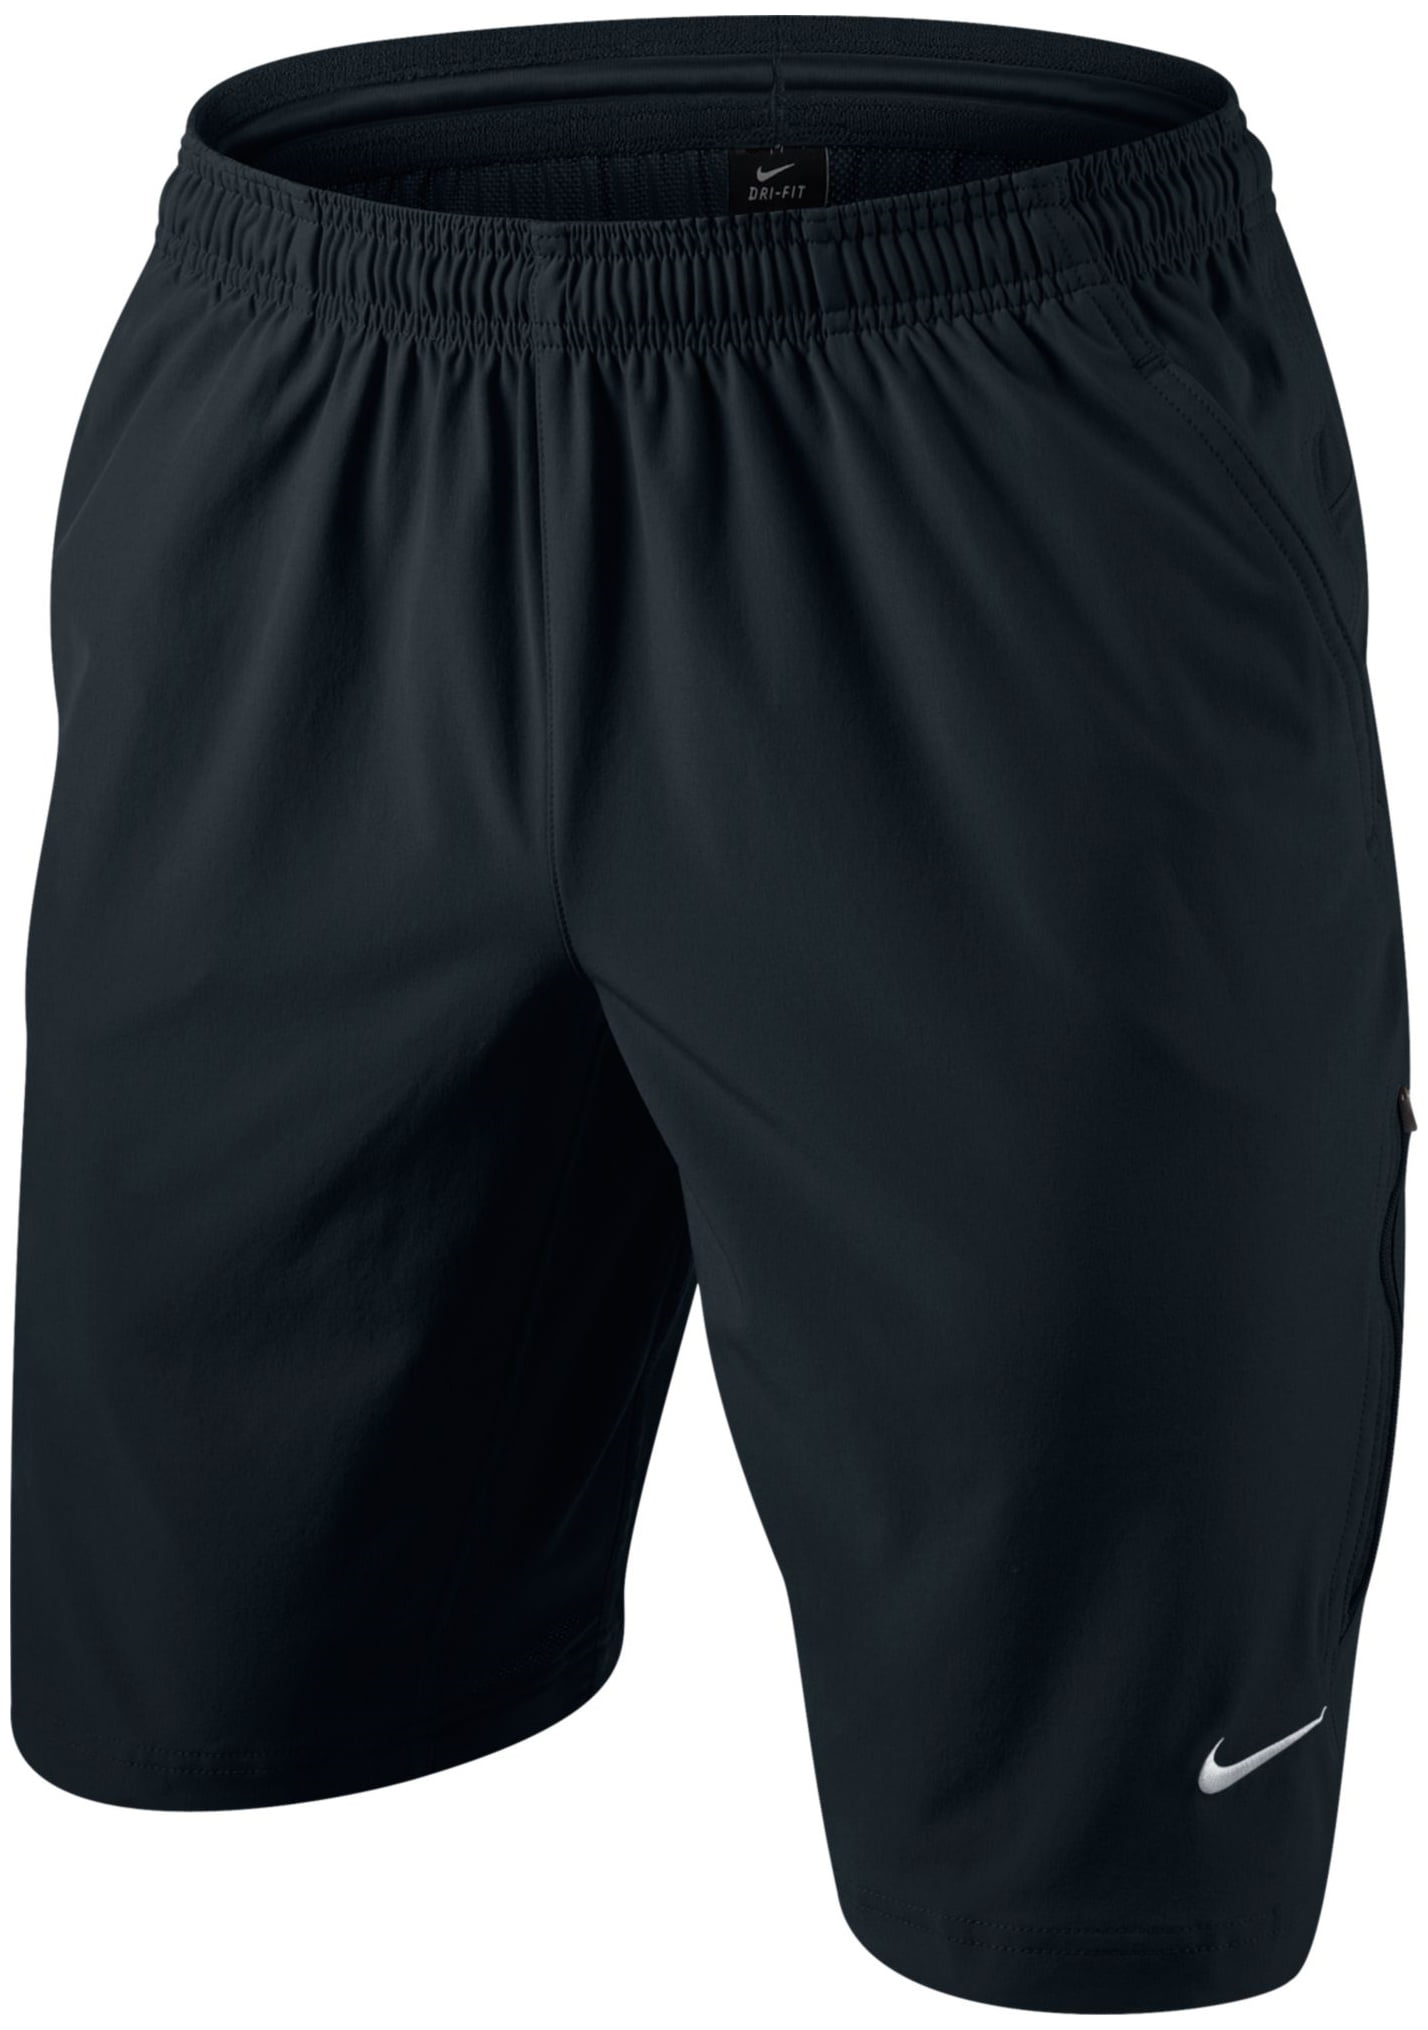 nike men's shorts 11 inch inseam